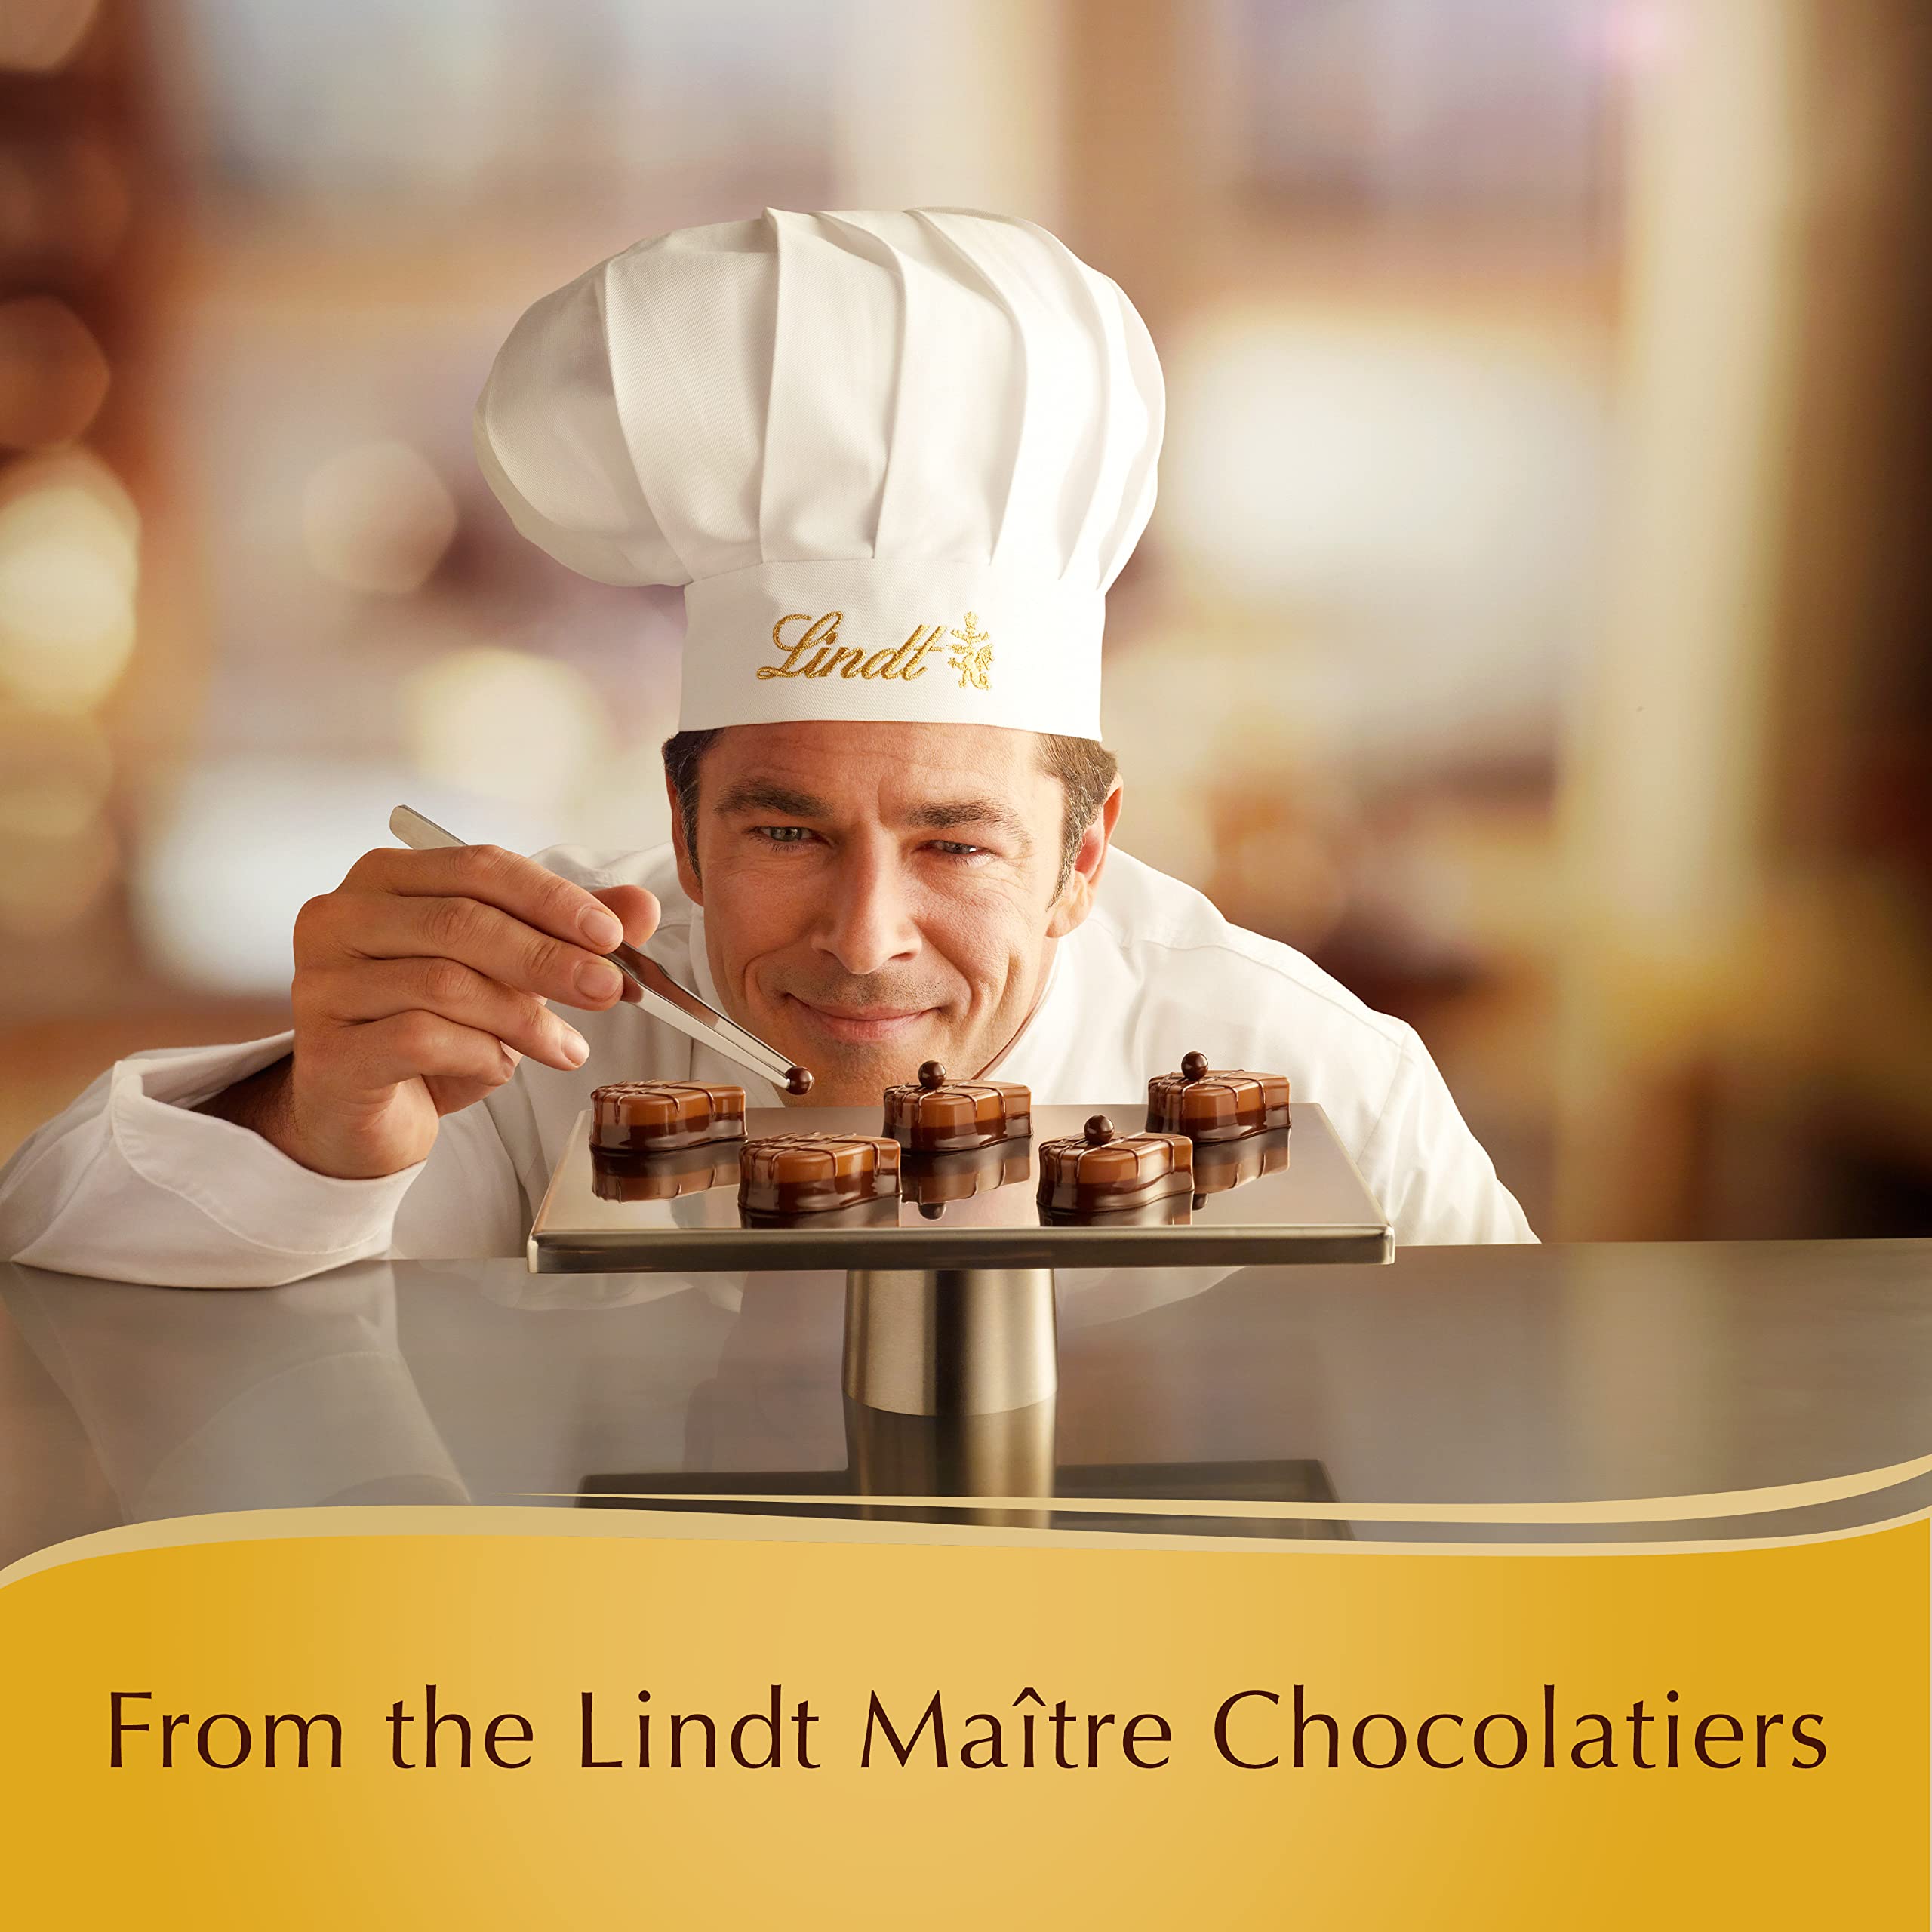 Hộp quà tặng chocolate LINDT Swiss Luxury -  19 cái